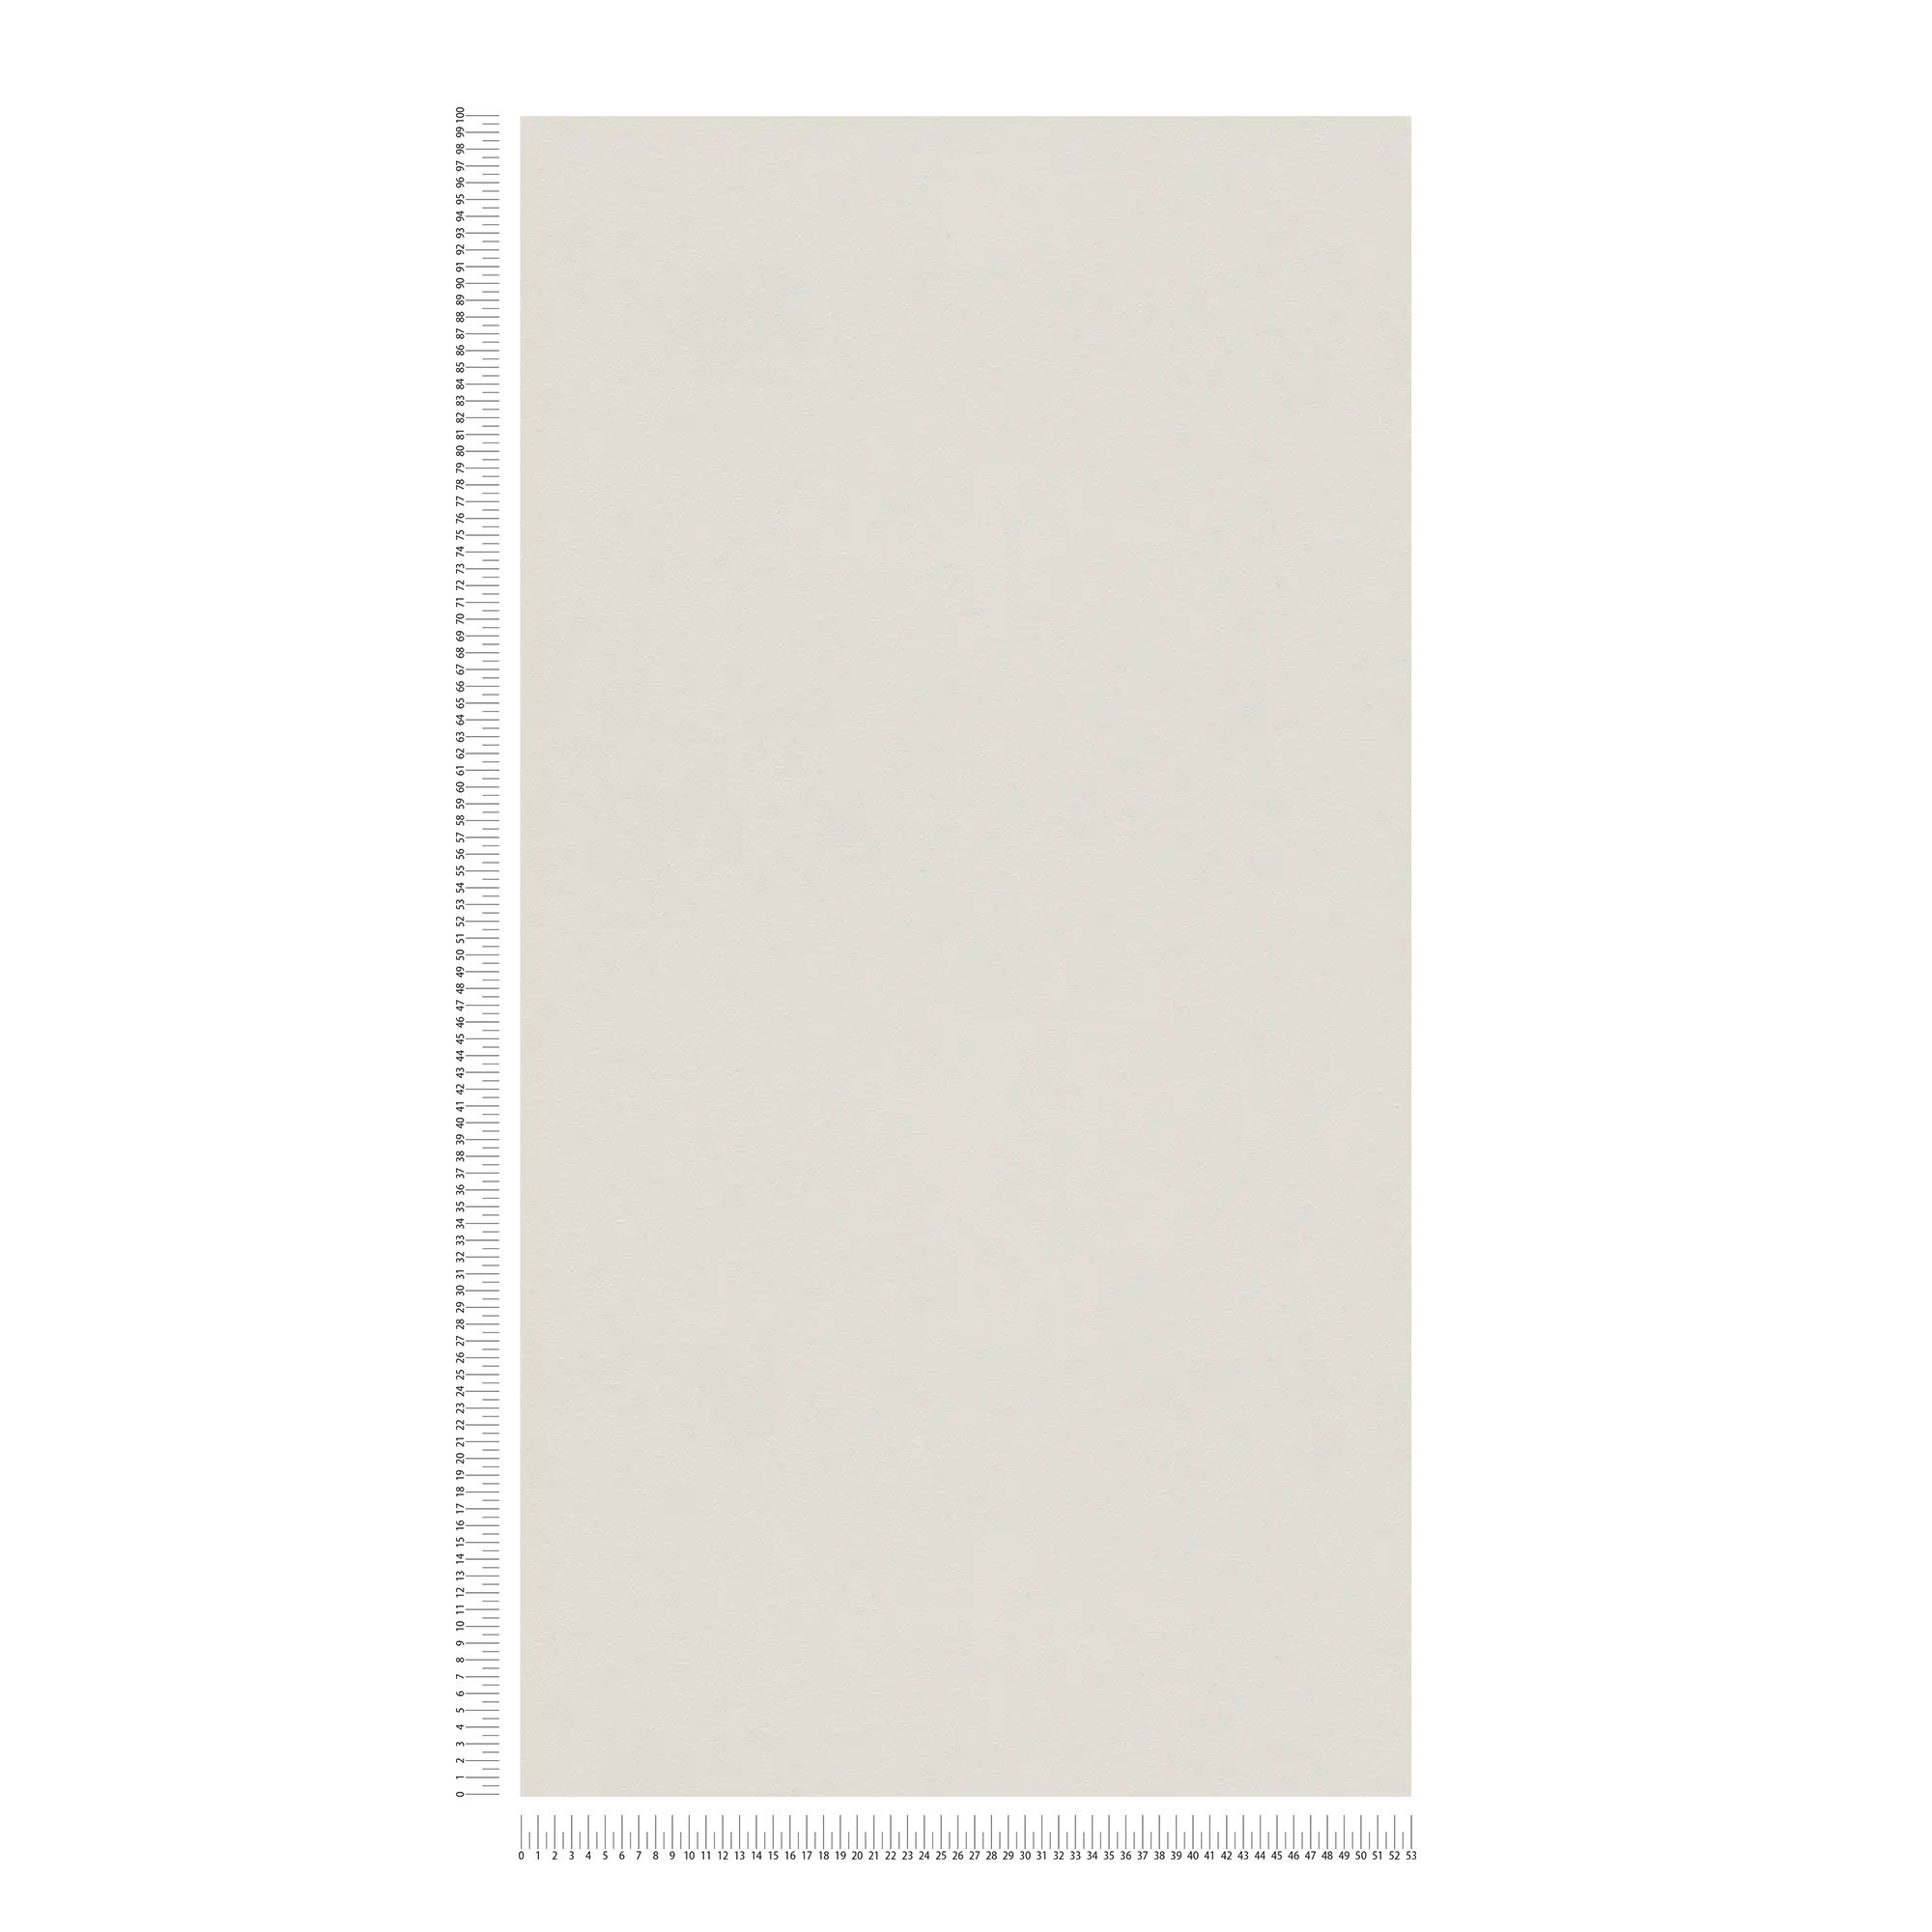             Carta da parati neutra con superficie opaca in seta - grigio
        